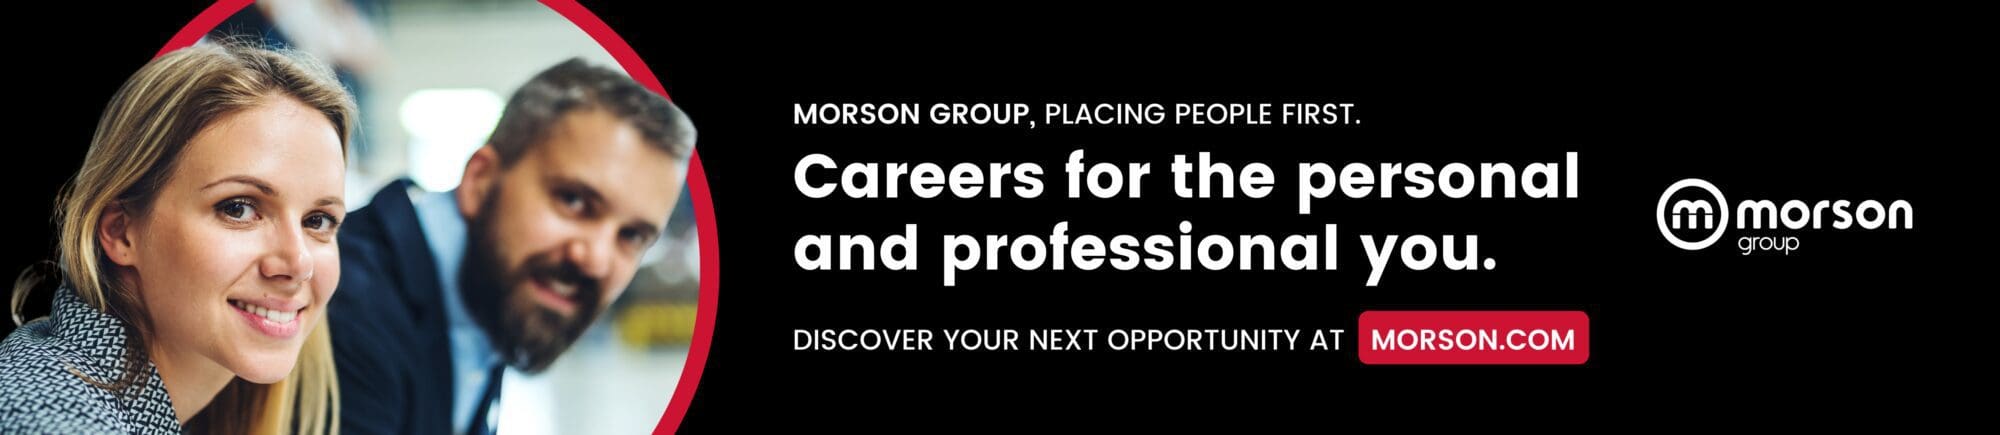 Morson Group - Find your next job